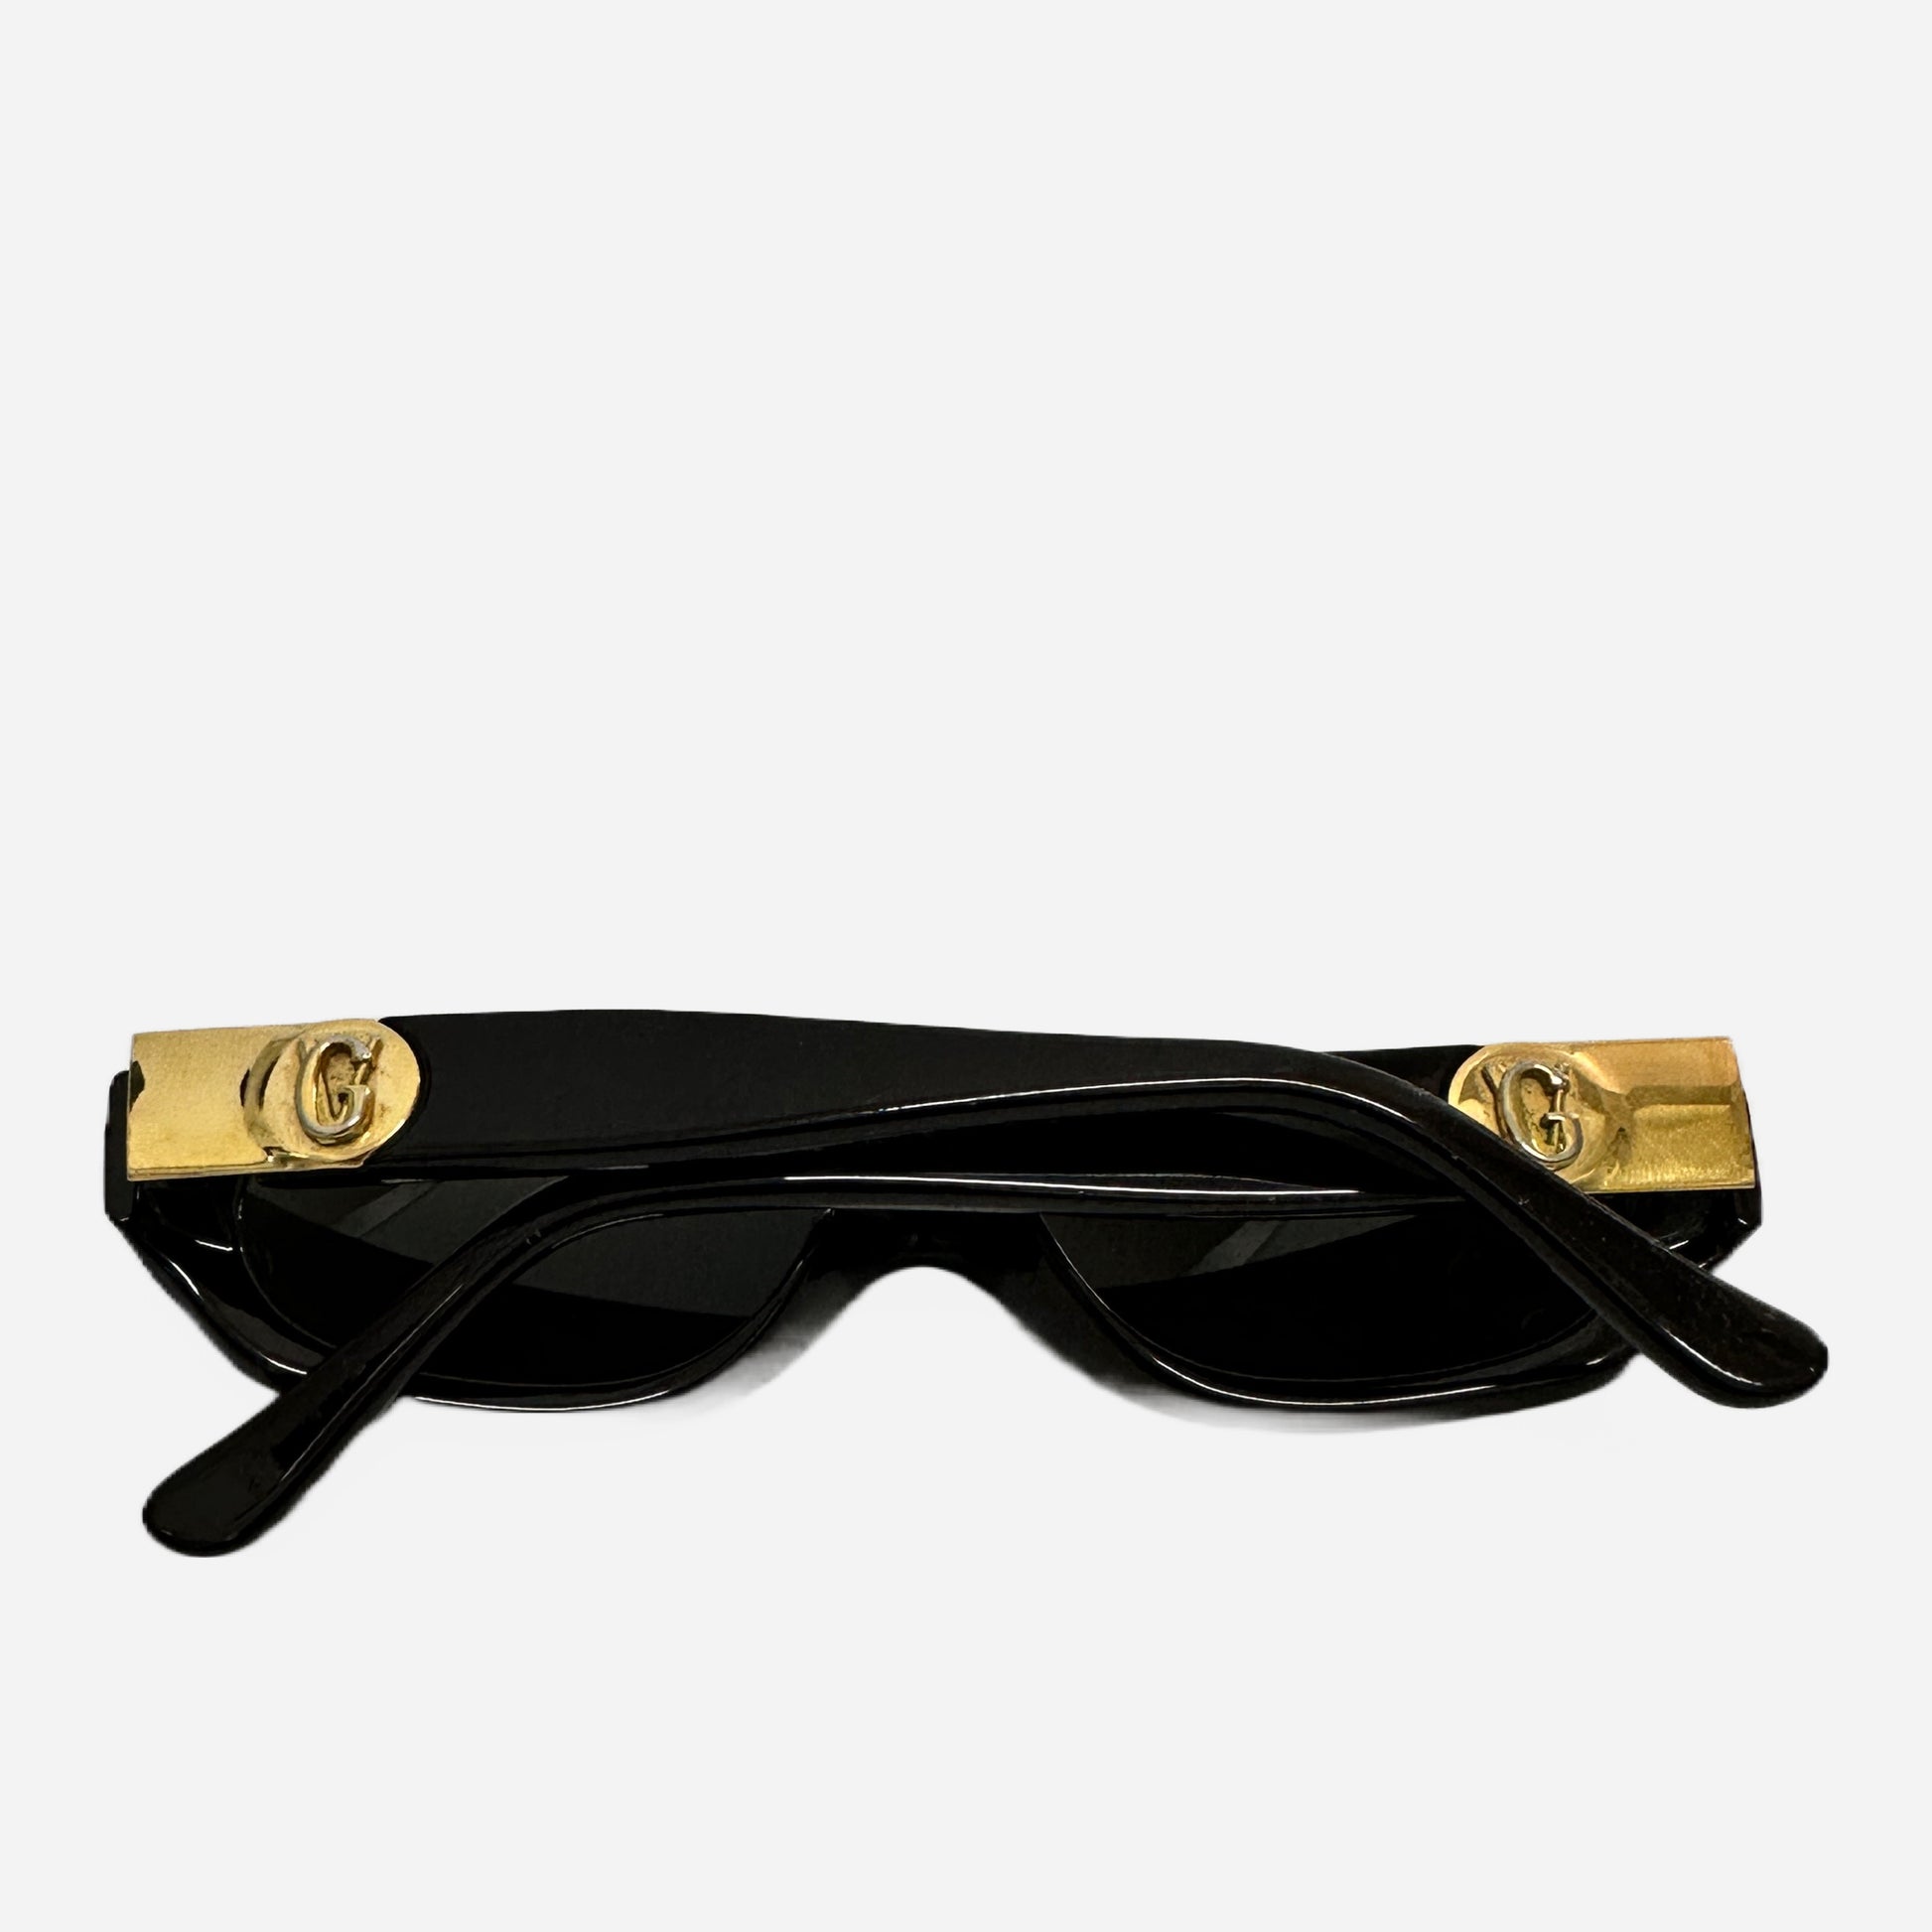 Vintage-Gianni-Versace-Sonnenbrille-Sunglasses-531-the-seekers-medusa-back